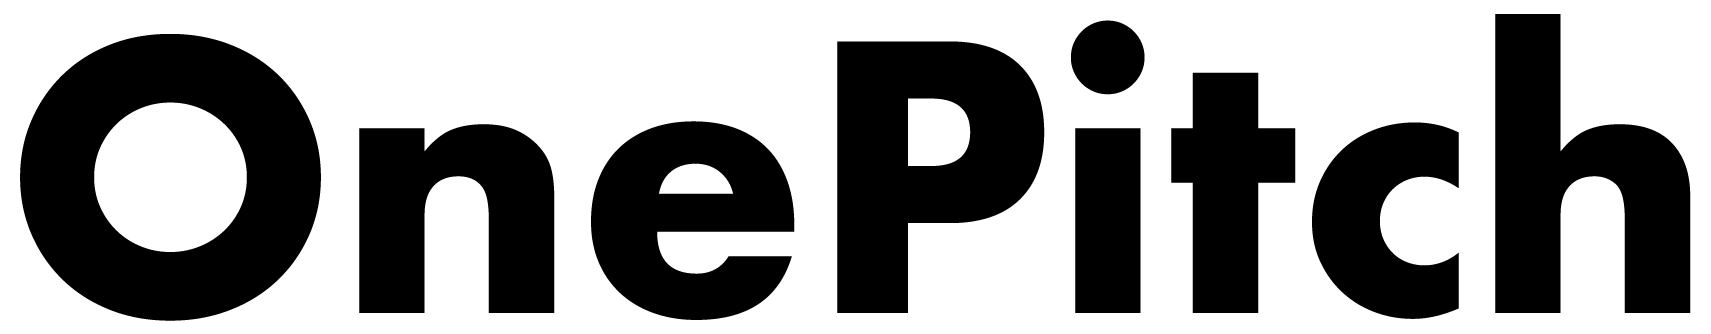 OnePitch Logo _ black on transparent-1